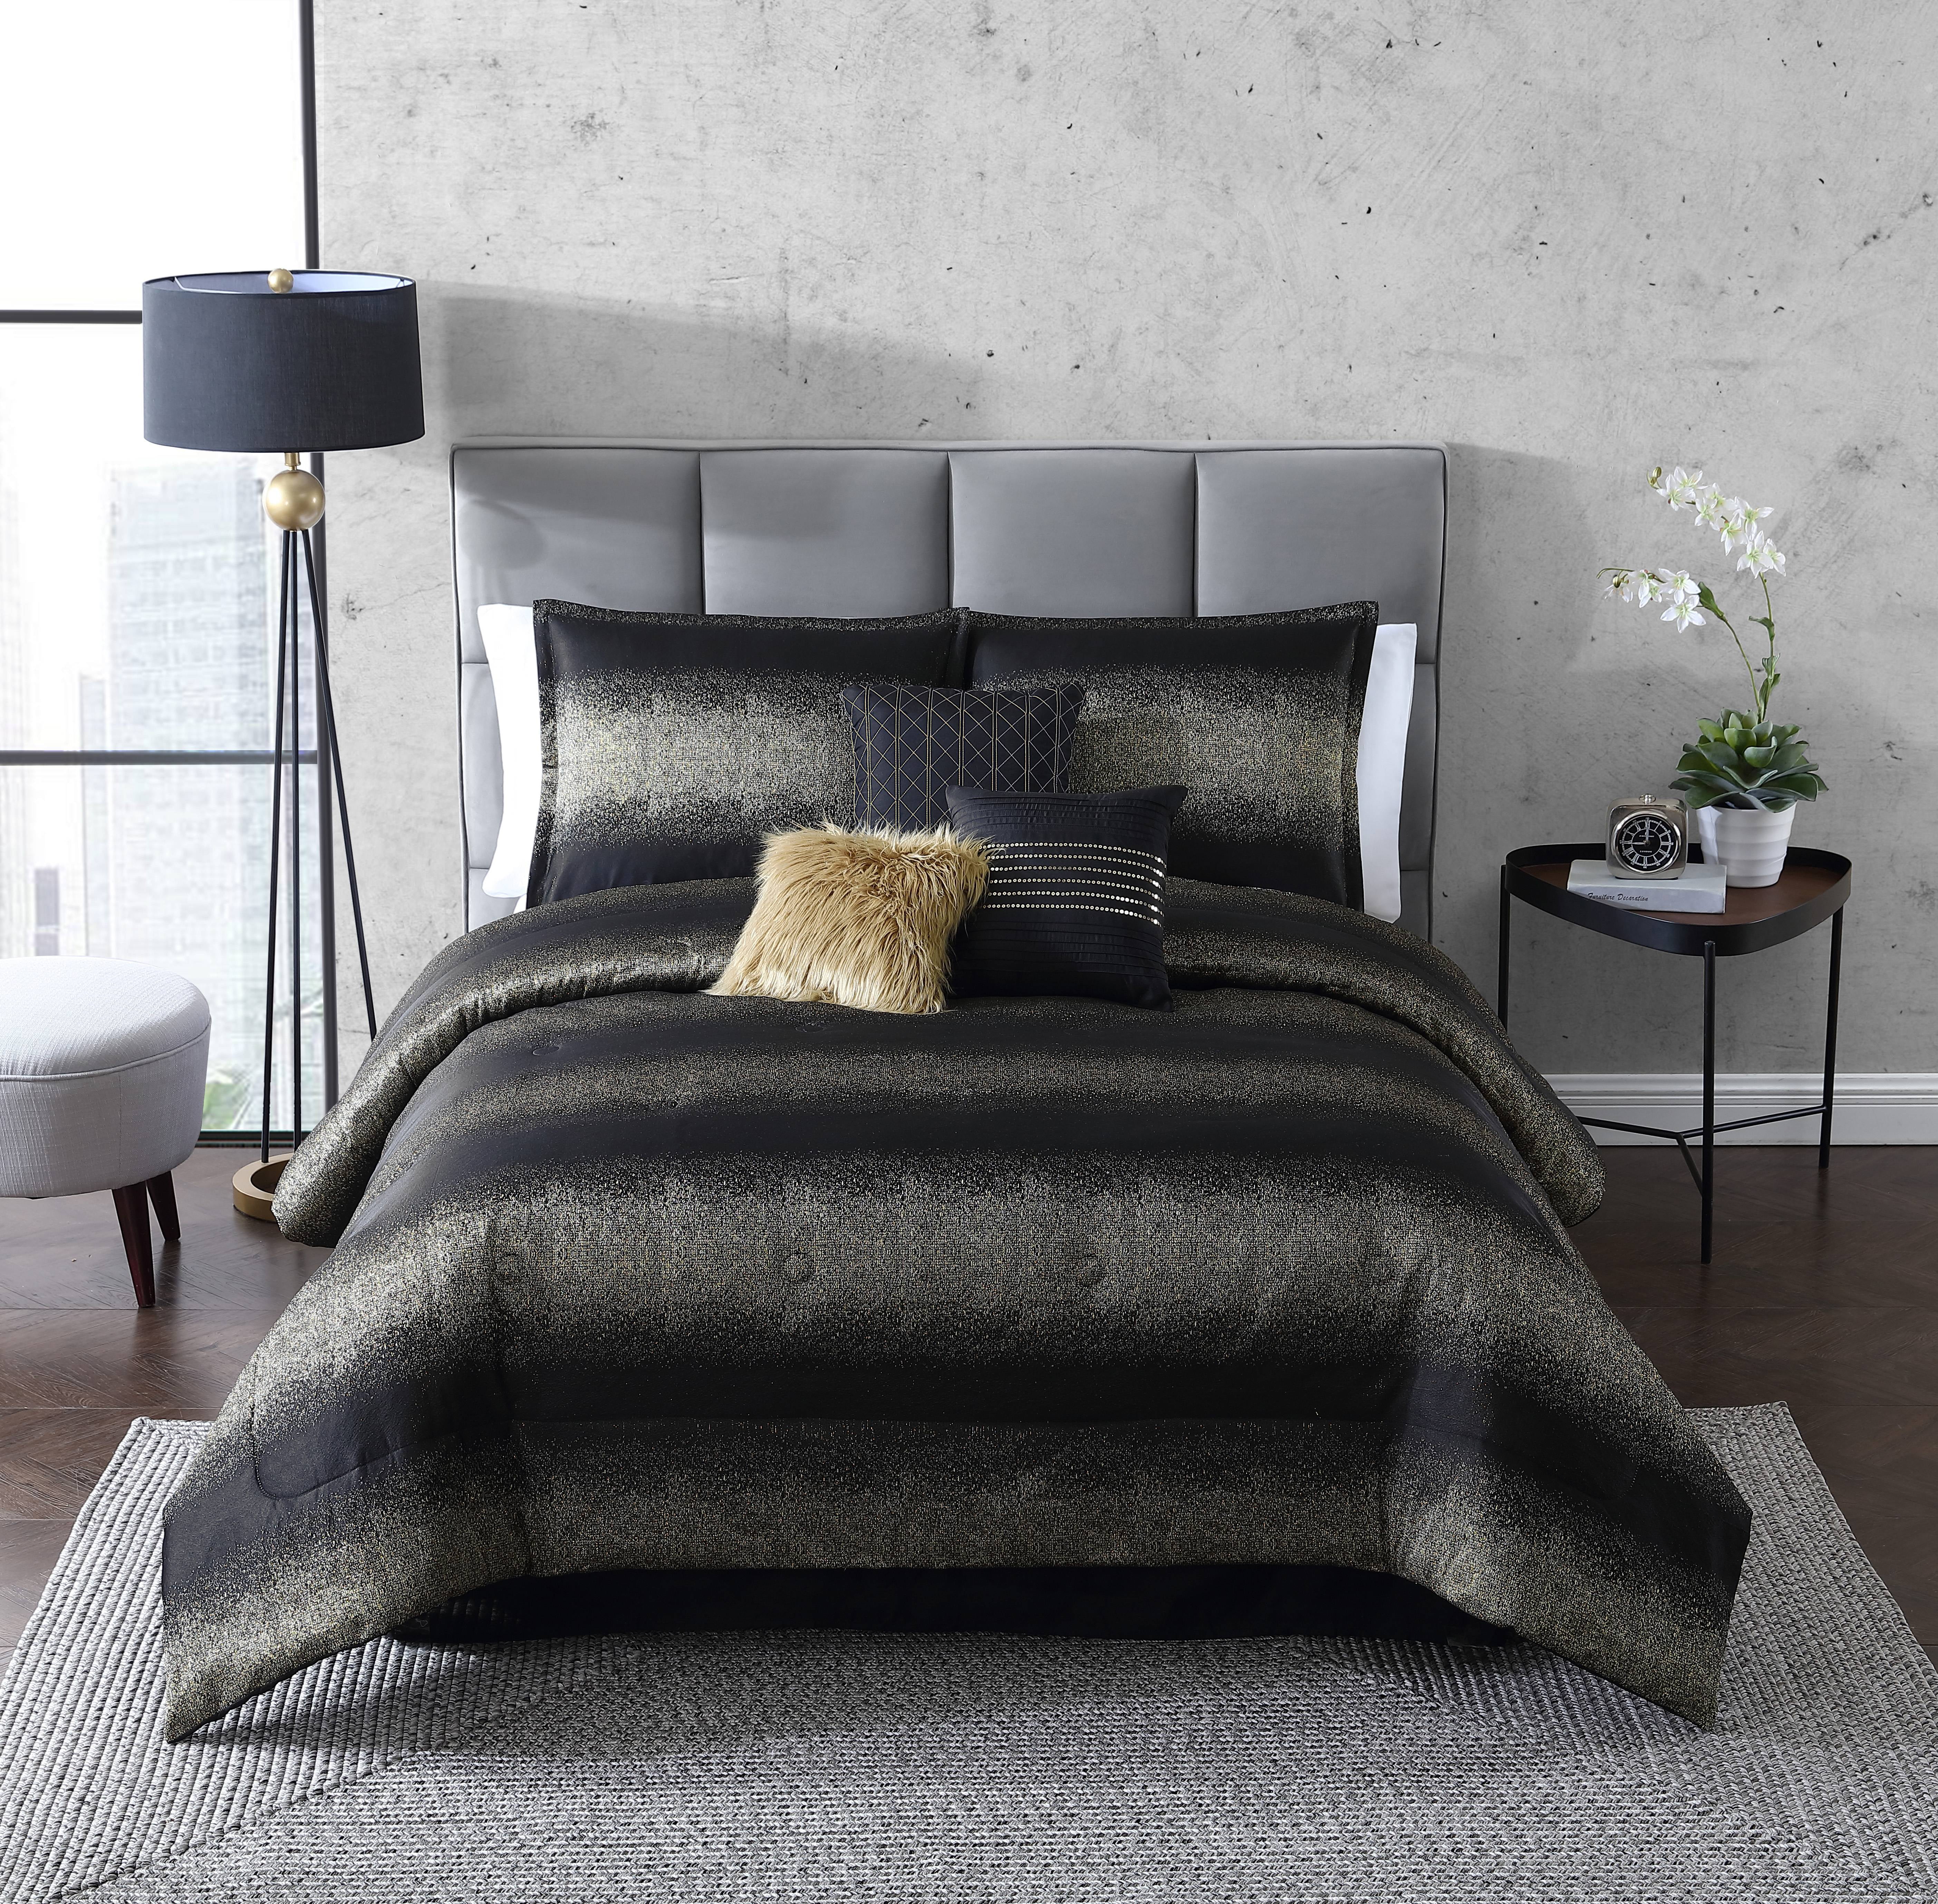 Metallic Stripe Jacqquard Comforter Set, Silver And Black King Size Bedding